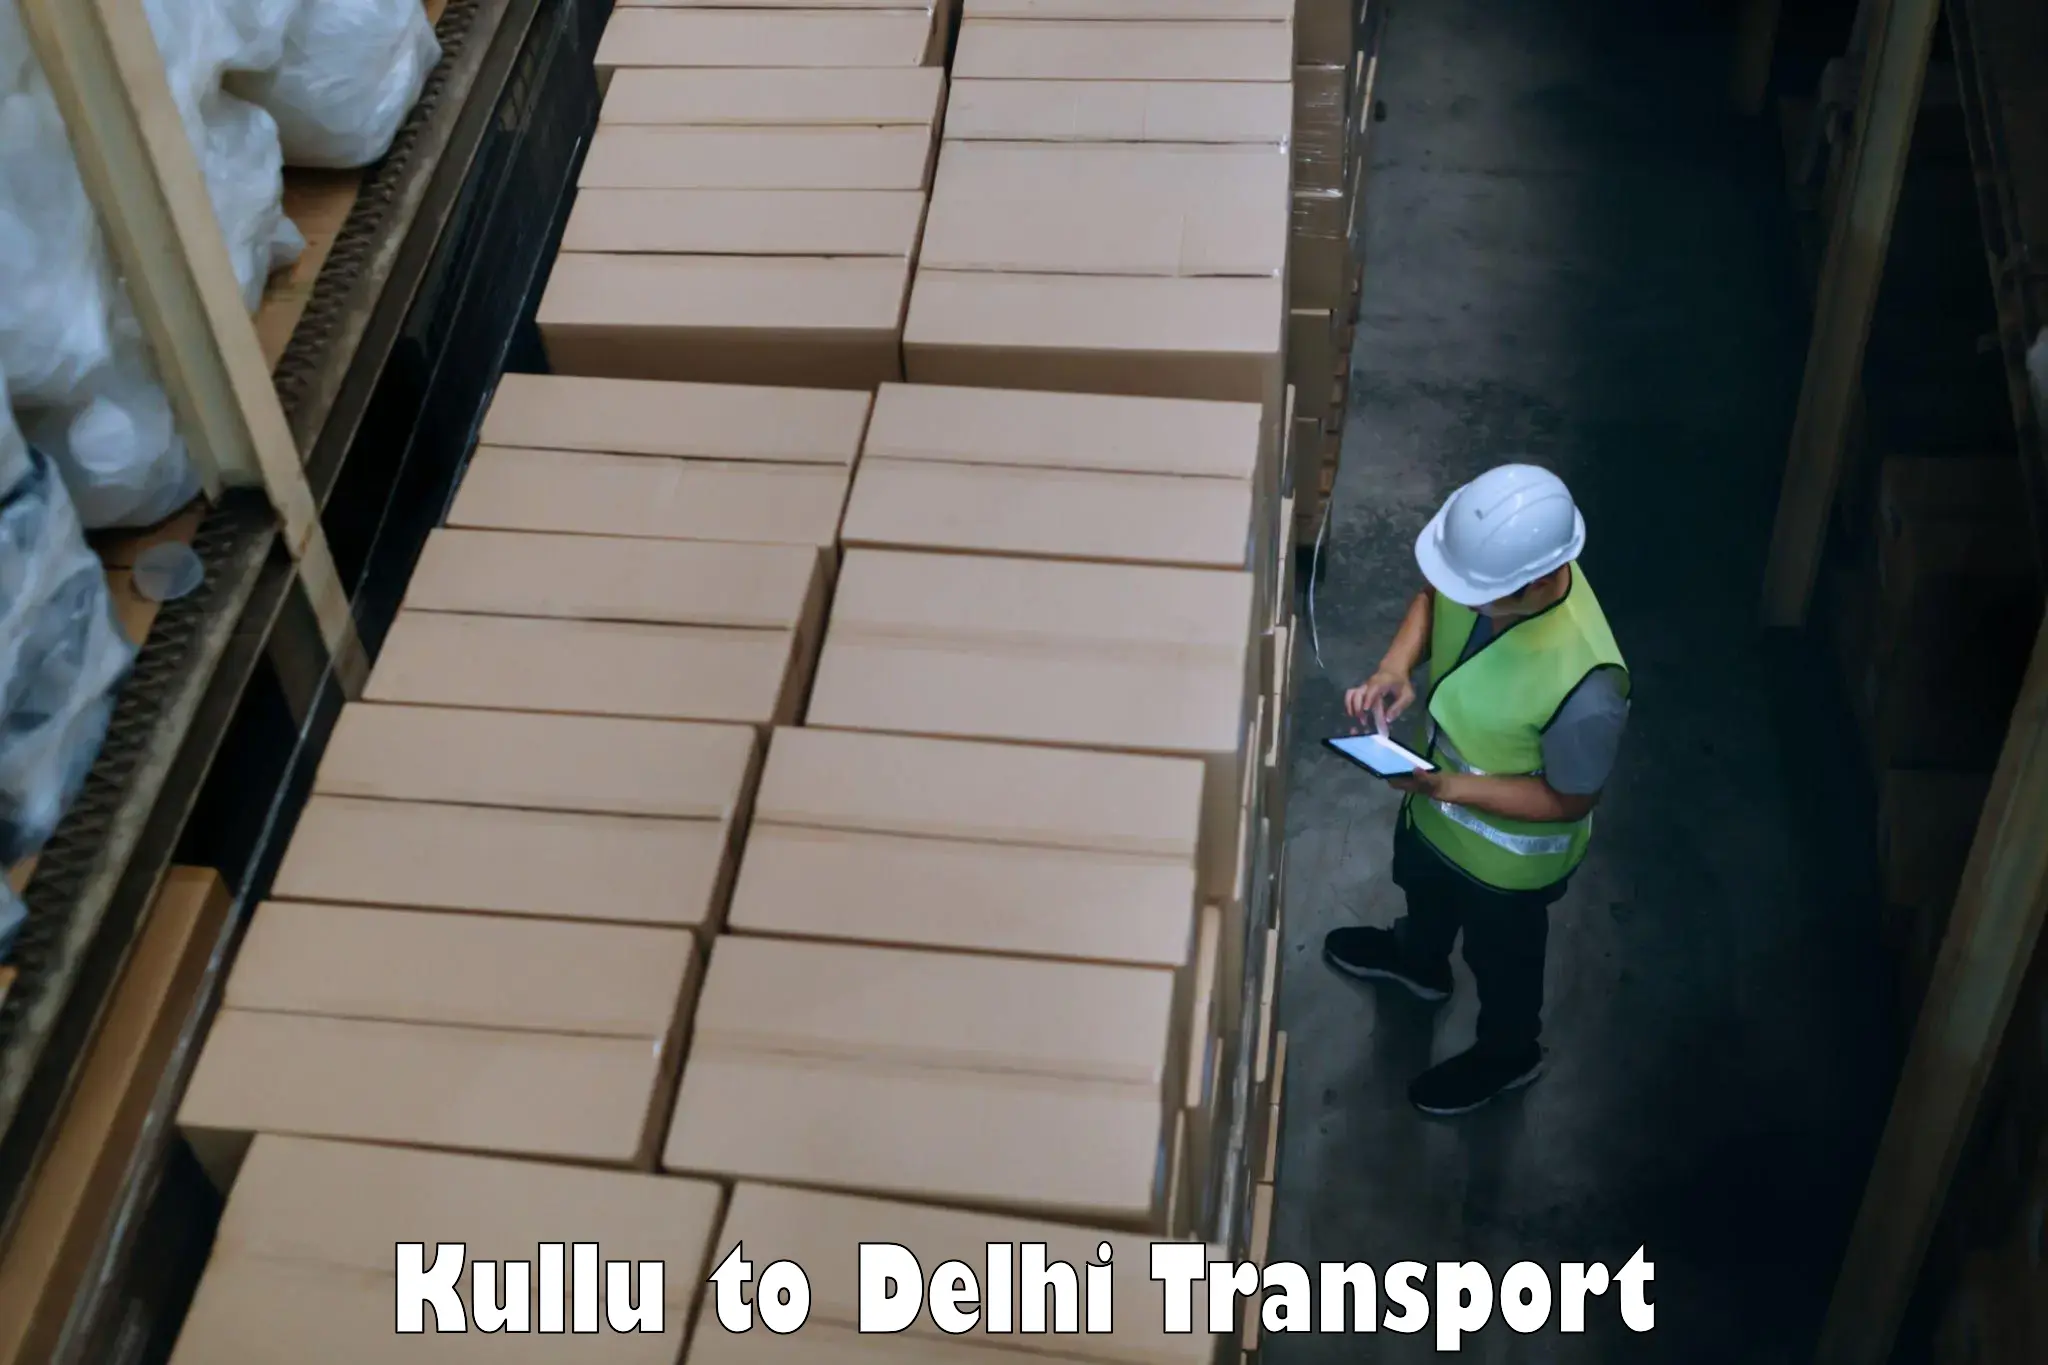 Container transport service Kullu to Delhi